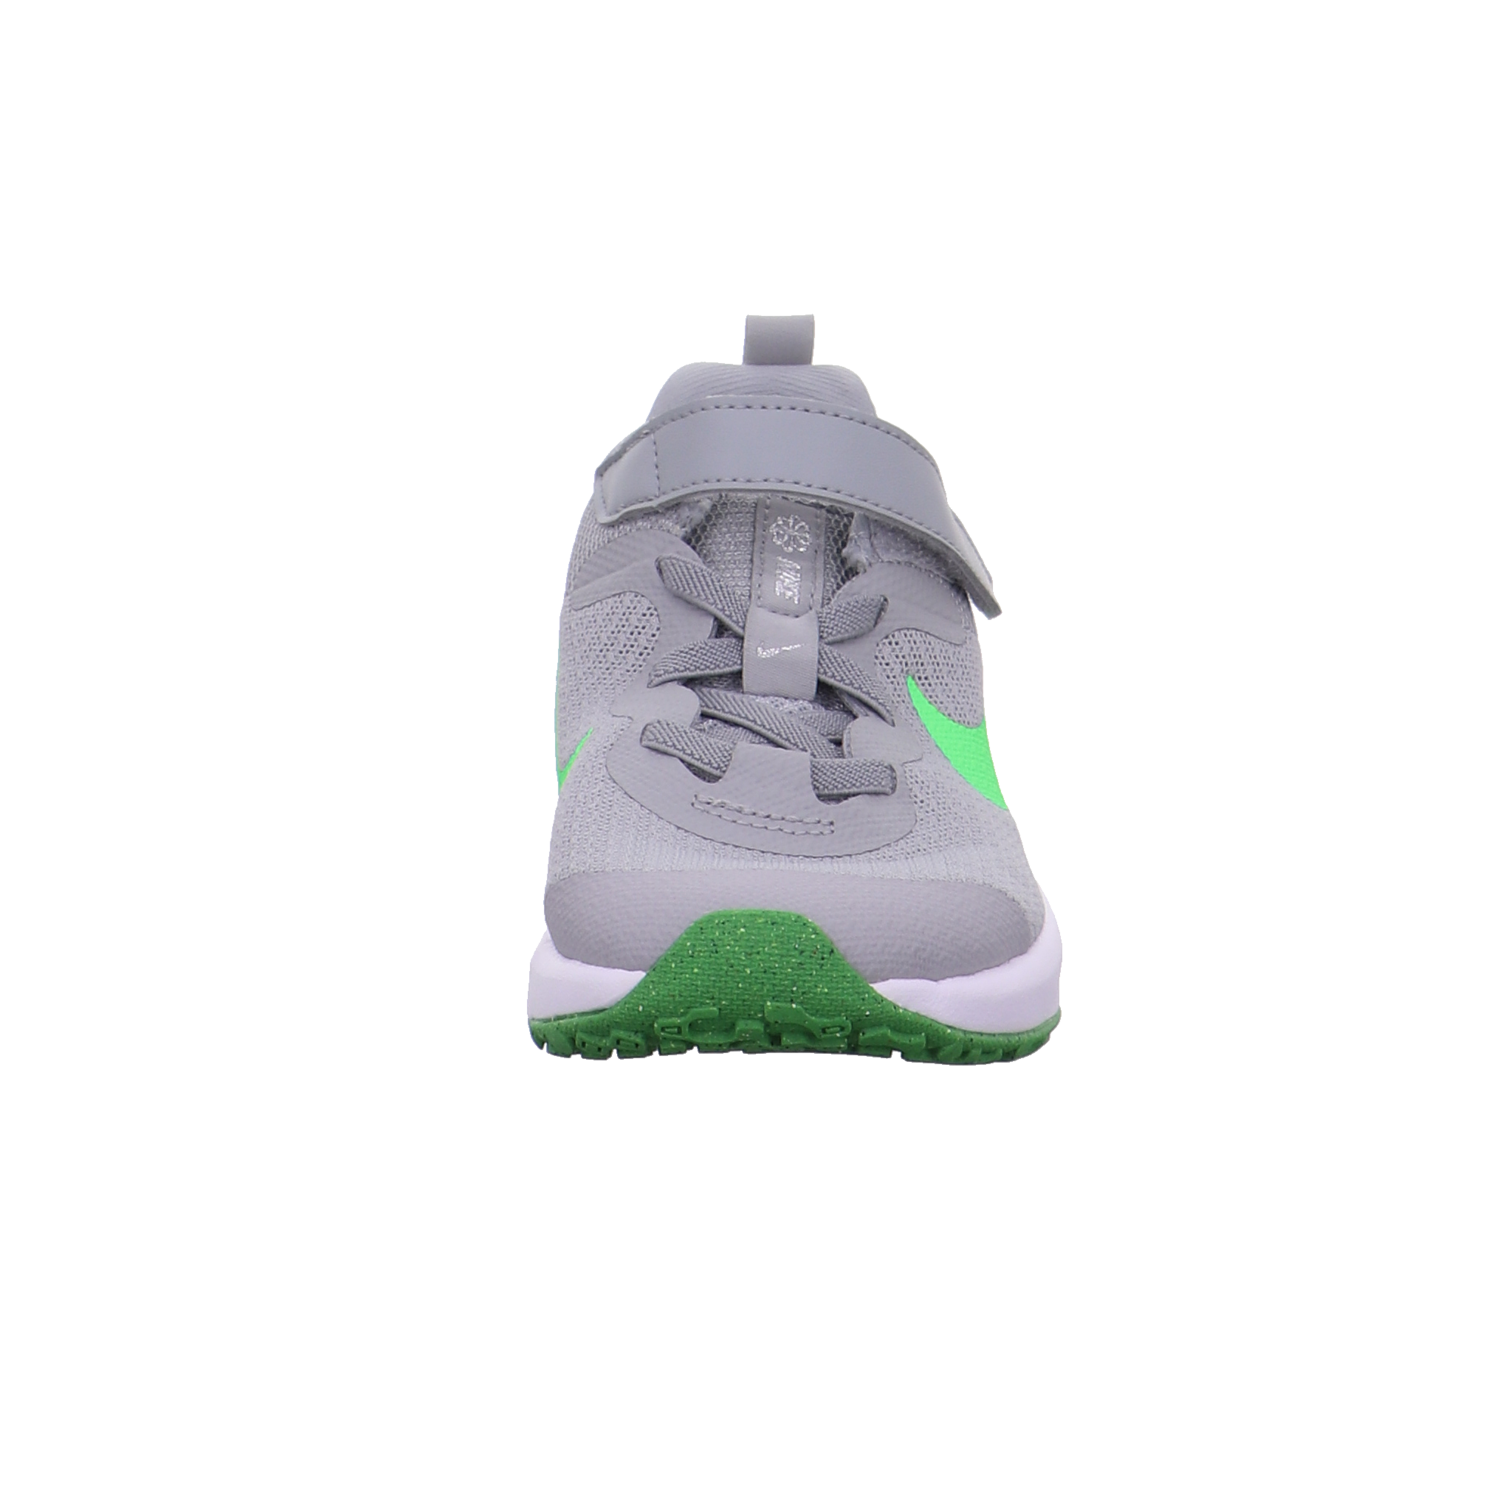 Nike Krabbel- und Lauflernschuhe grau kombi Bild3